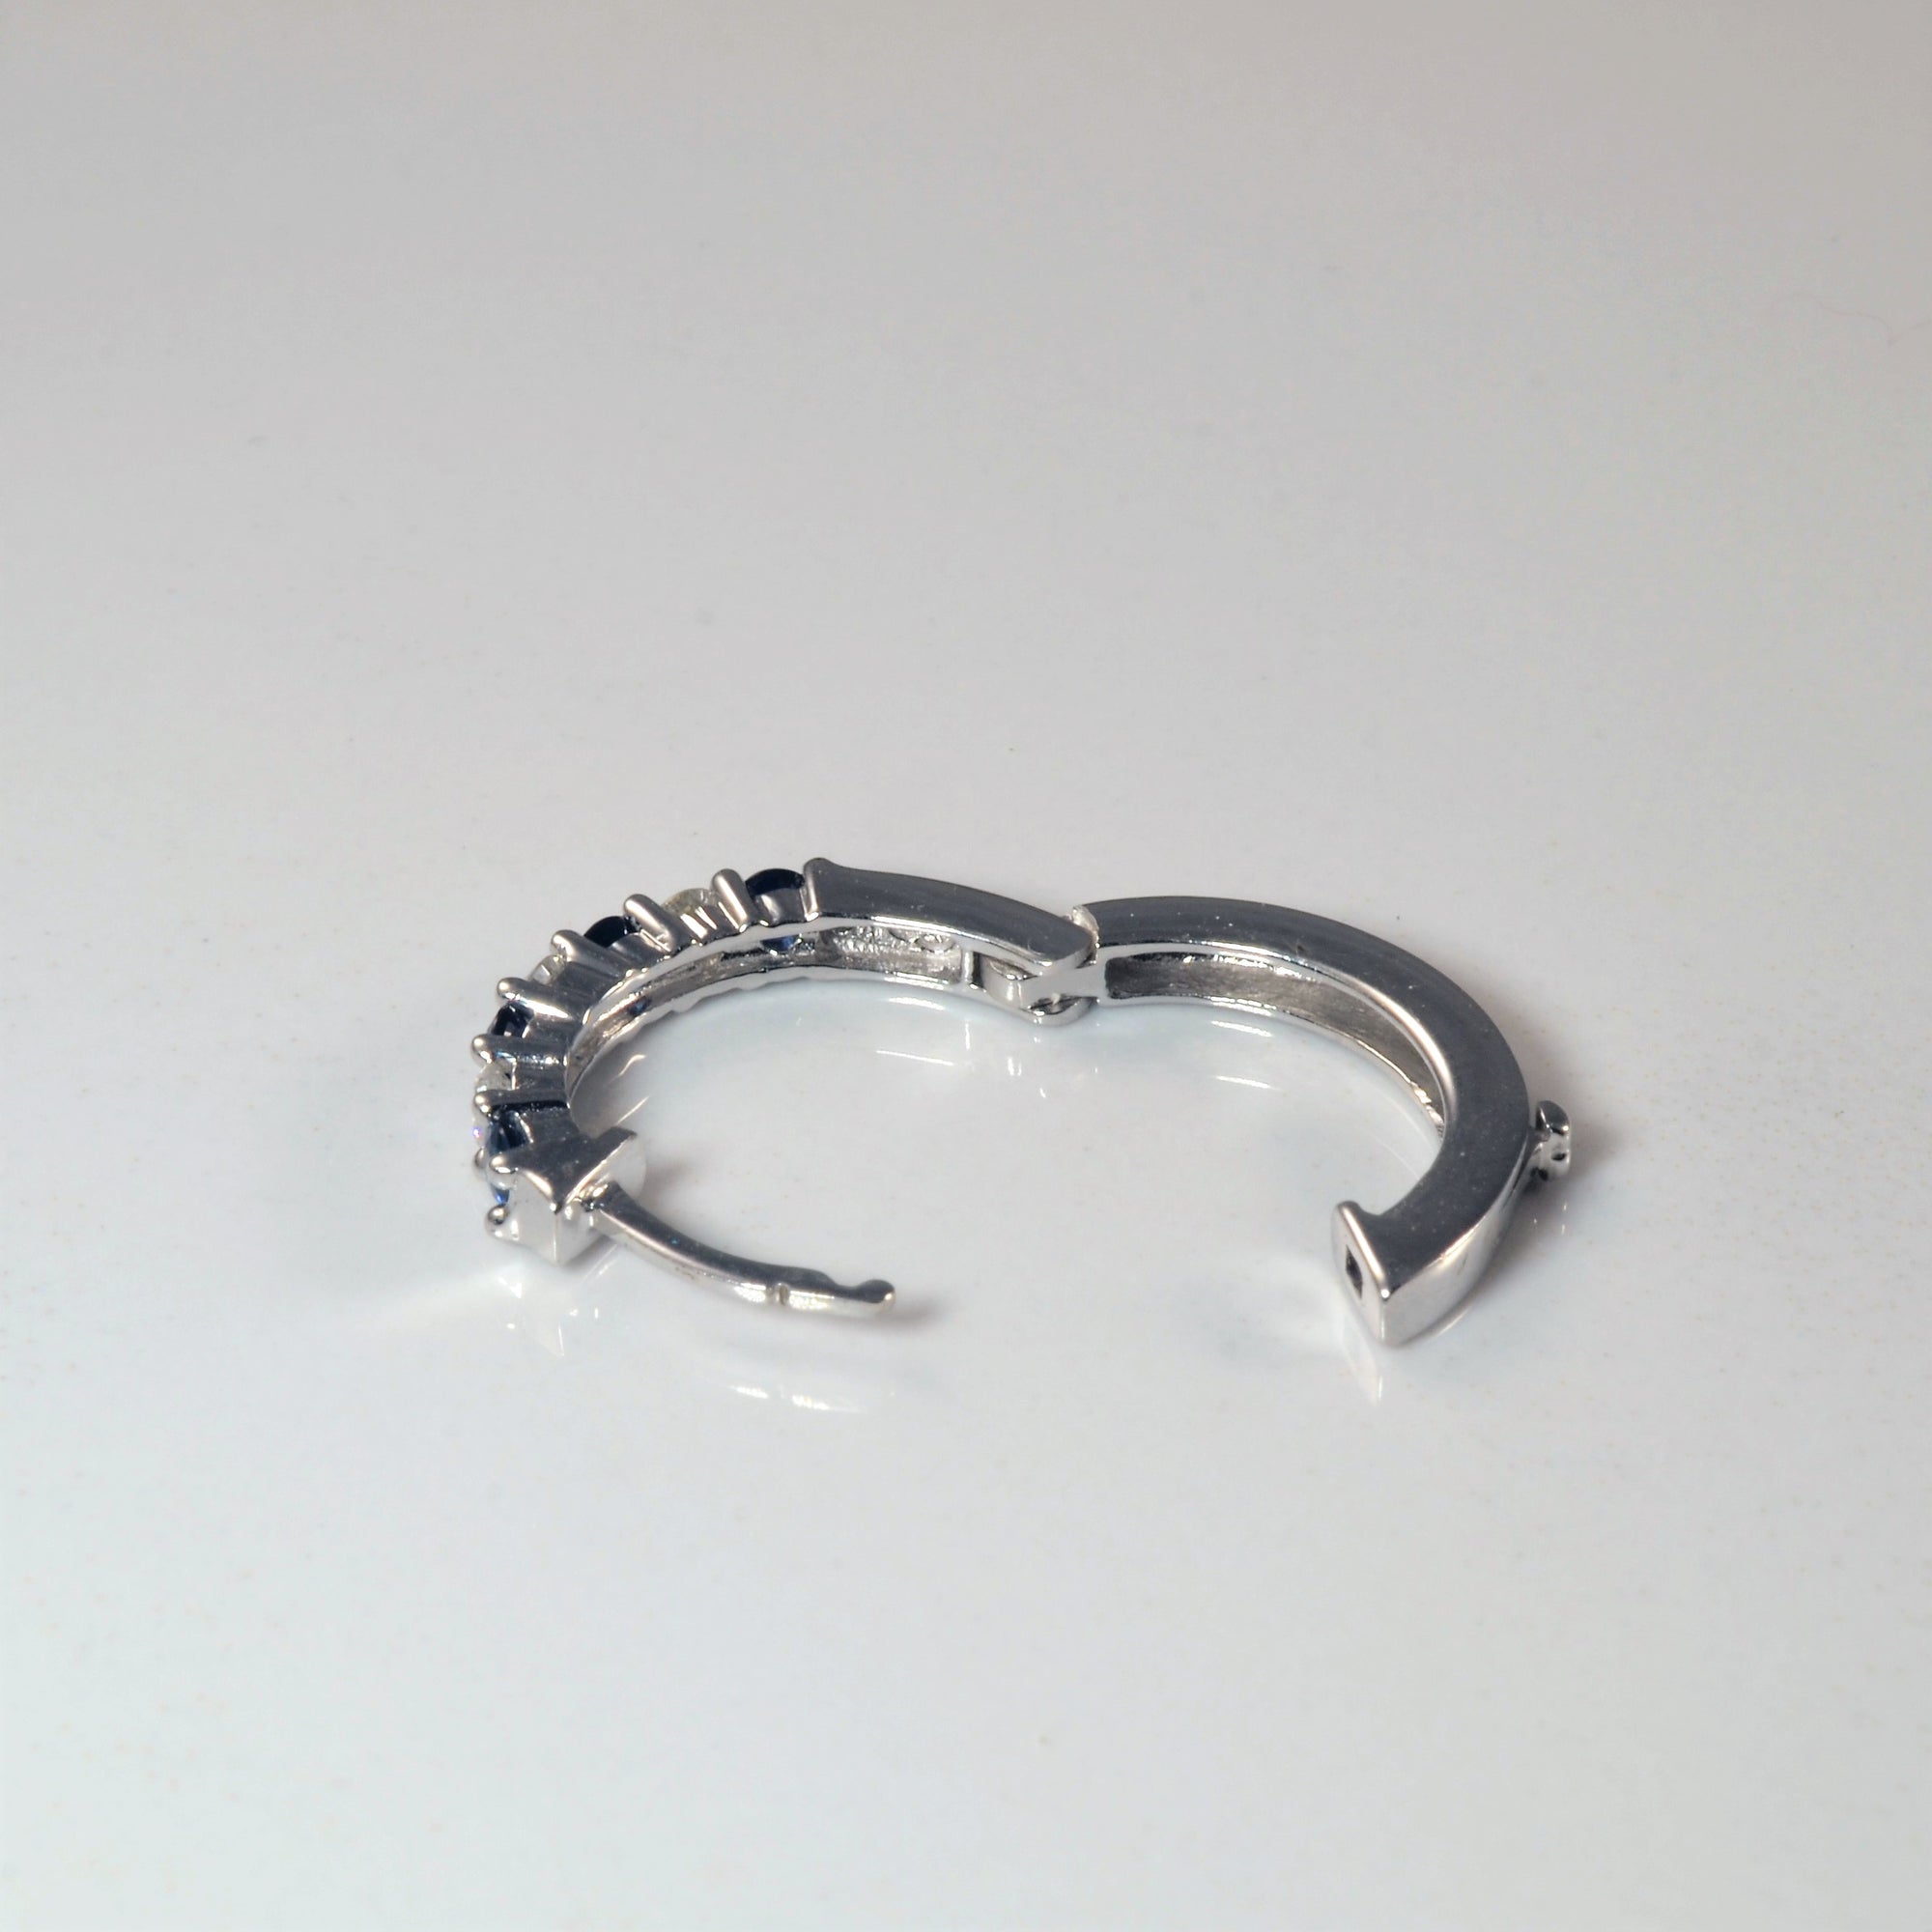 Sapphire & Diamond Hoop Earrings | 0.40ctw, 0.30ctw |